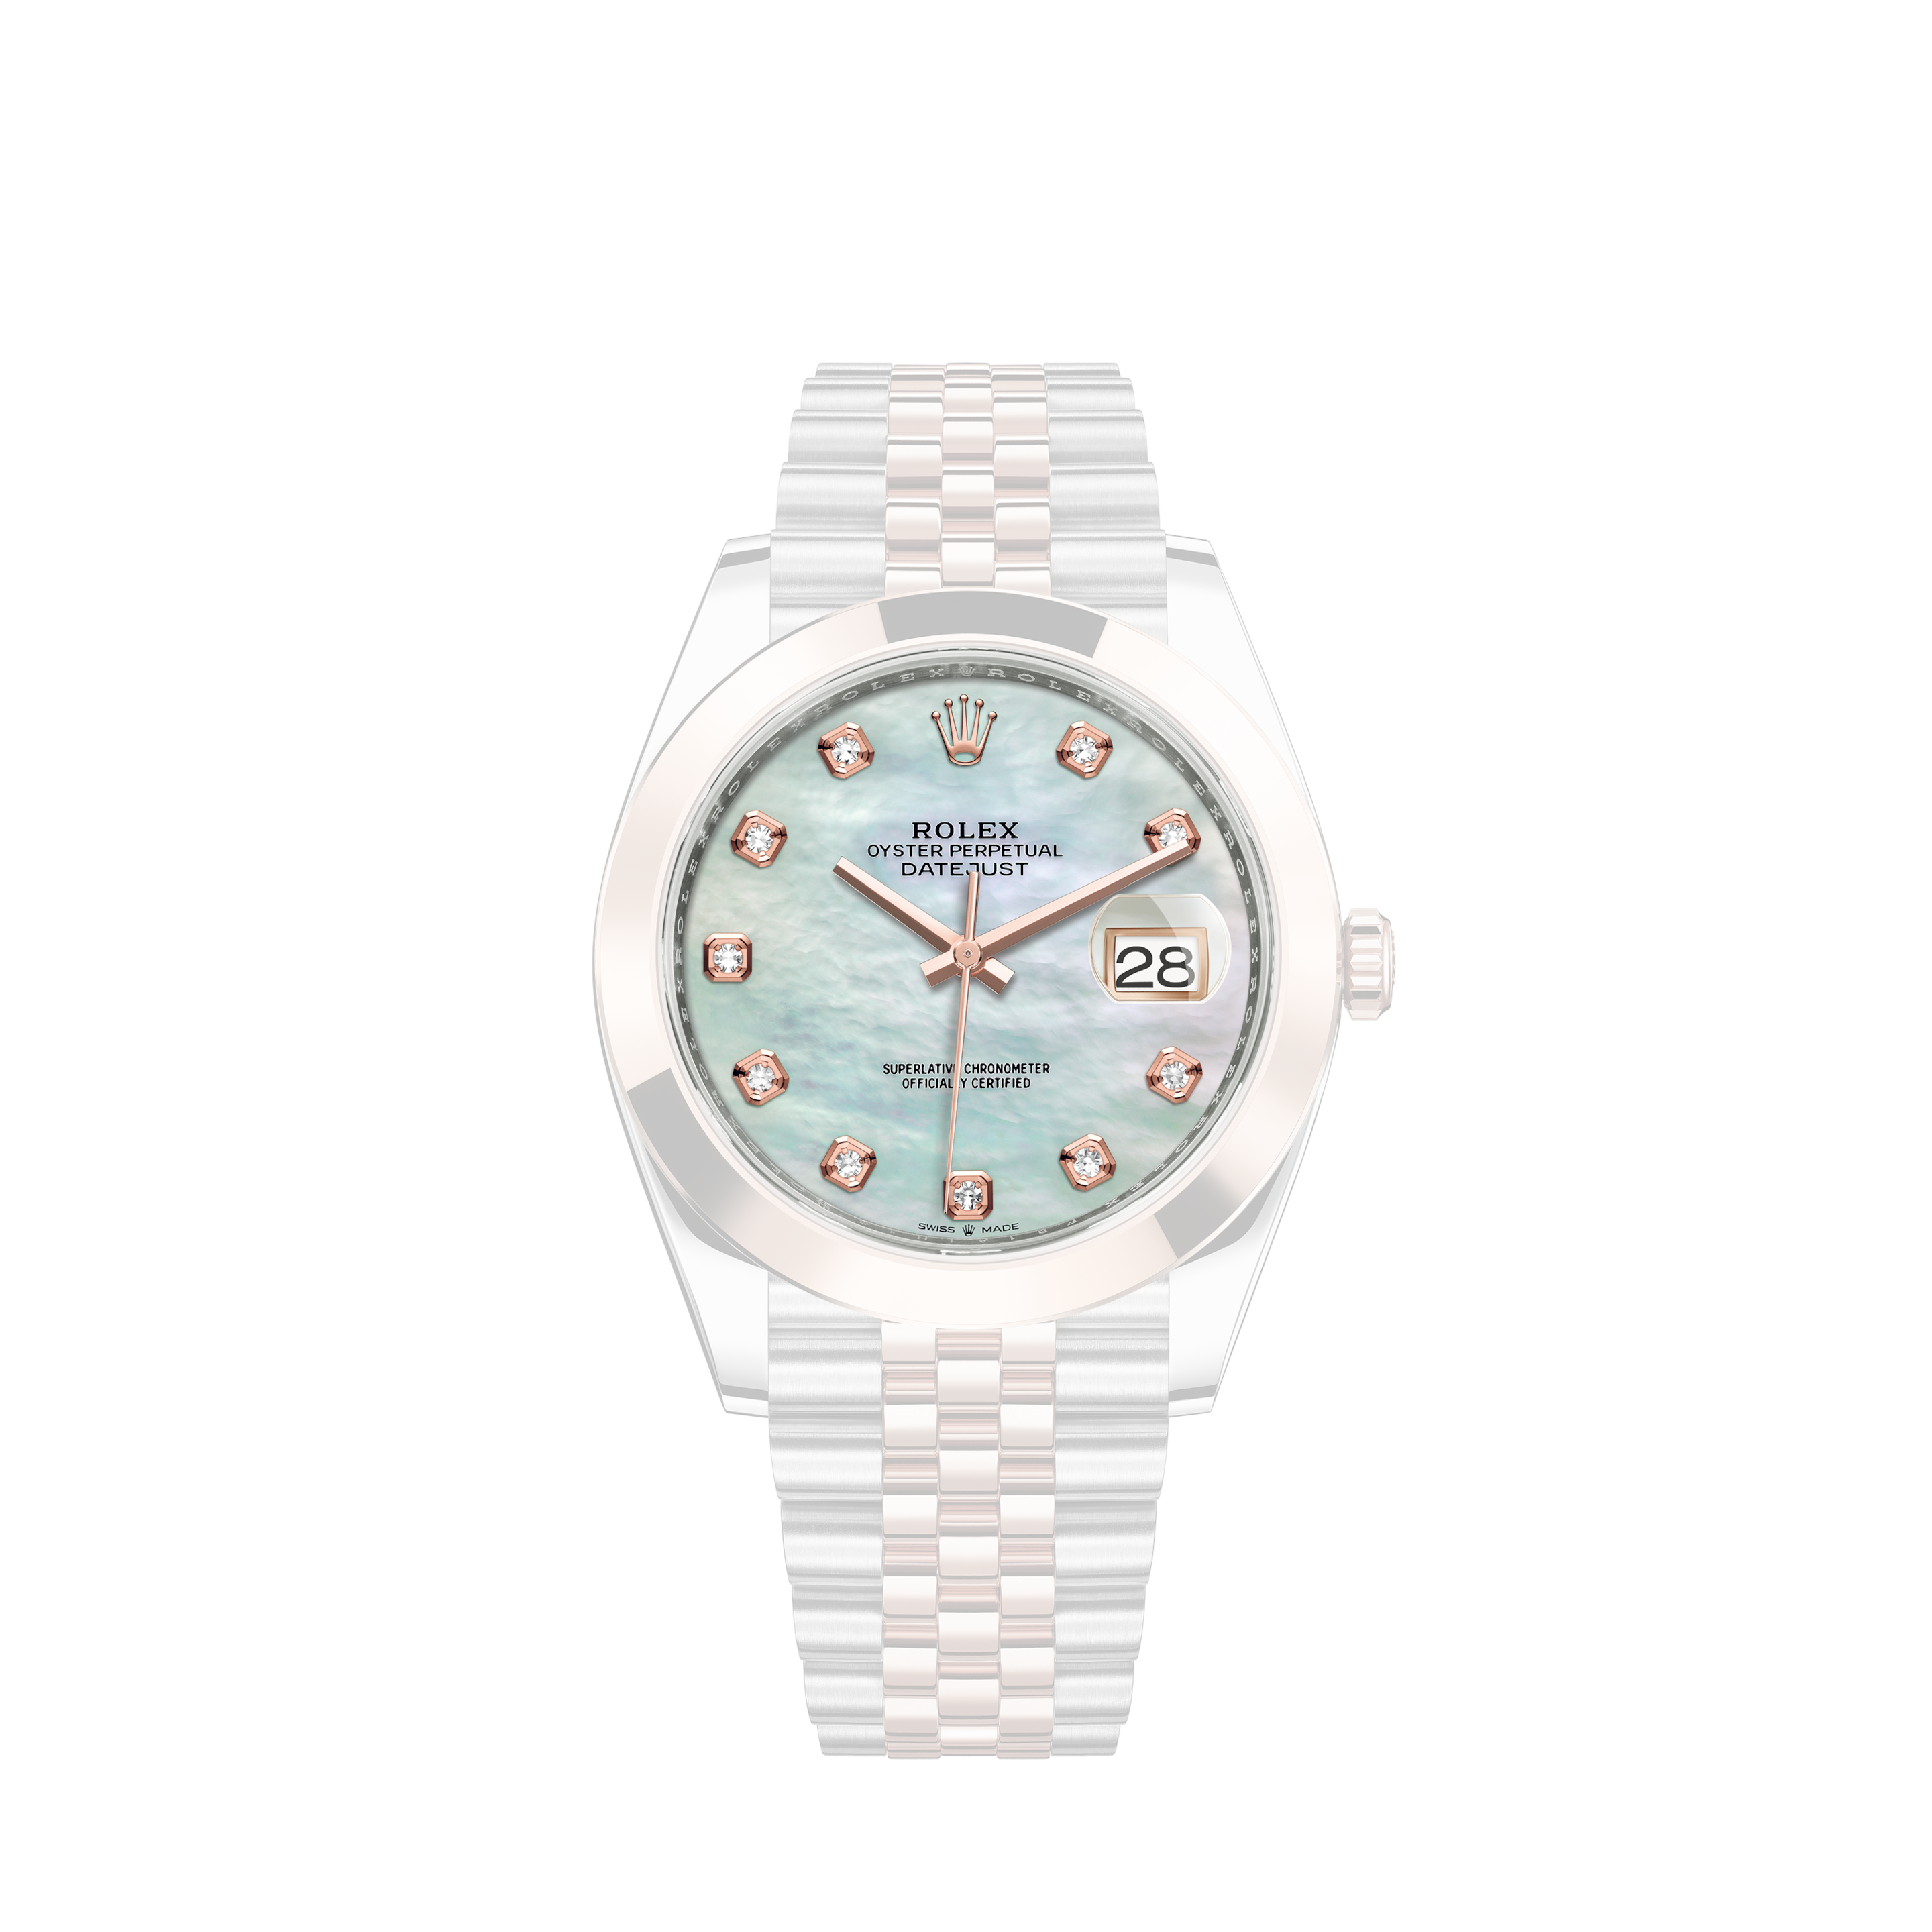 Rolex Datejust 2-Tone Steel & Gold Men's Automatic Watch 16013